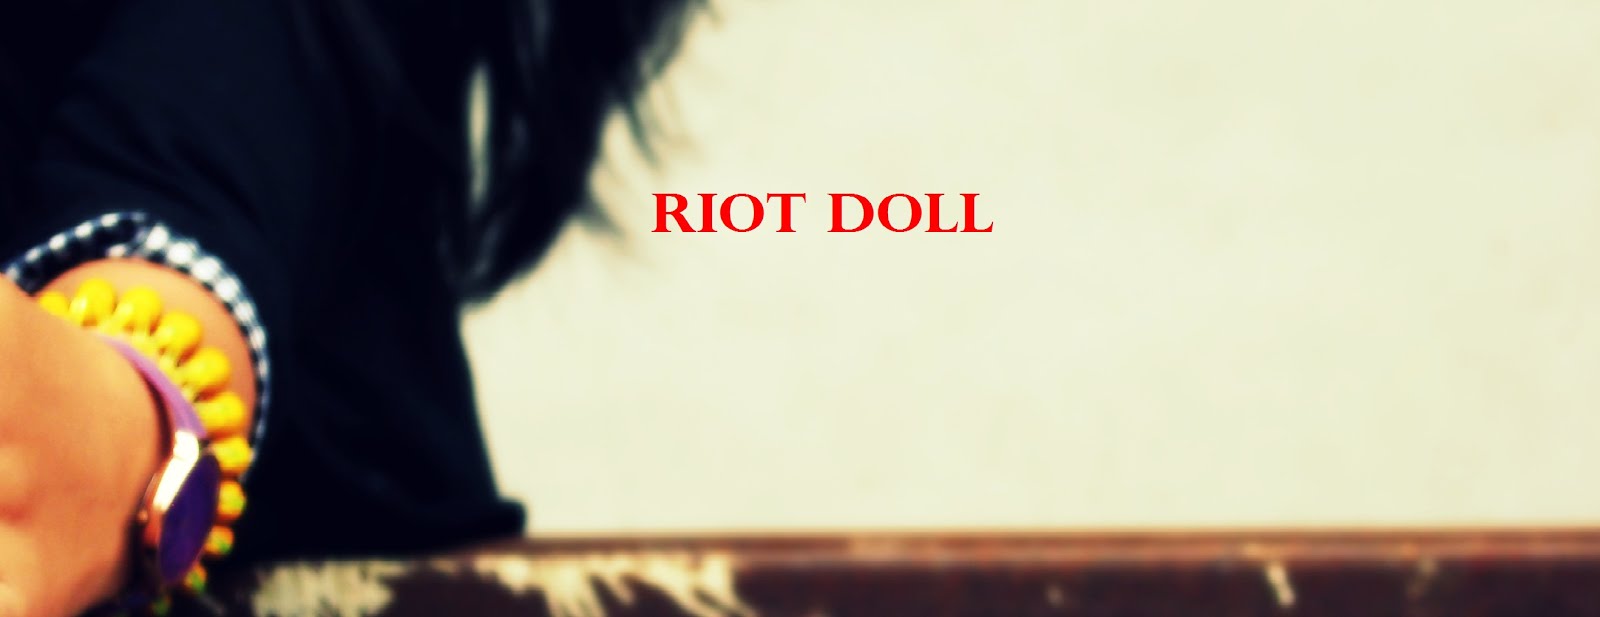 Riot Doll